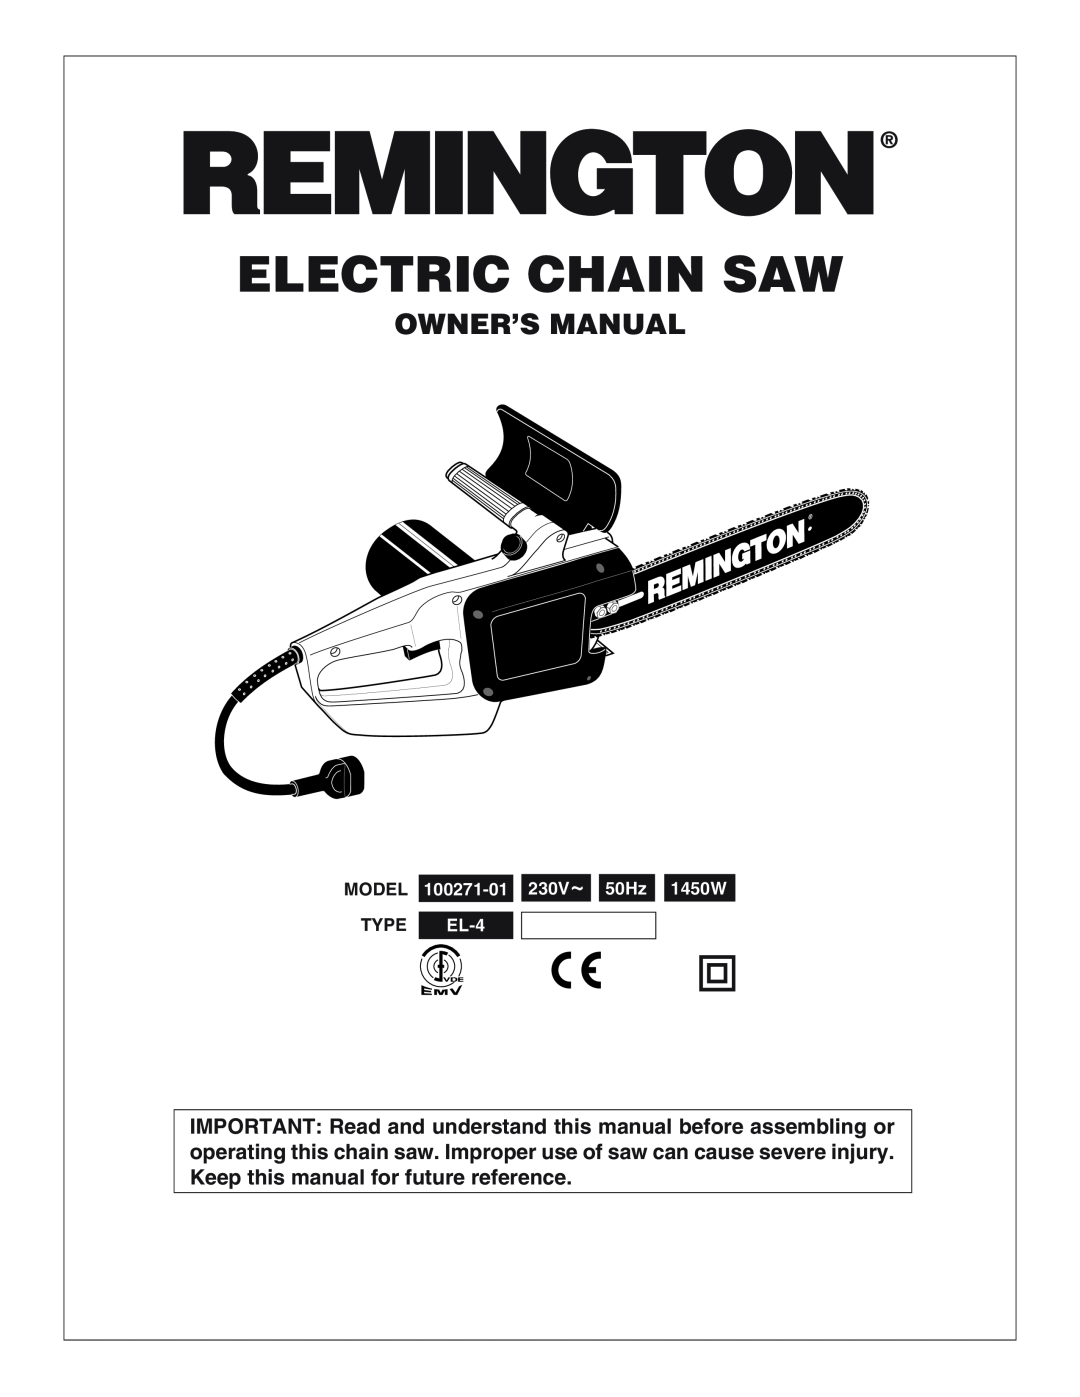 Desa owner manual Owner’S Manual, MODEL 100271-01 230V~ 50Hz 1450W, TYPE EL-4, Electric Chain Saw 